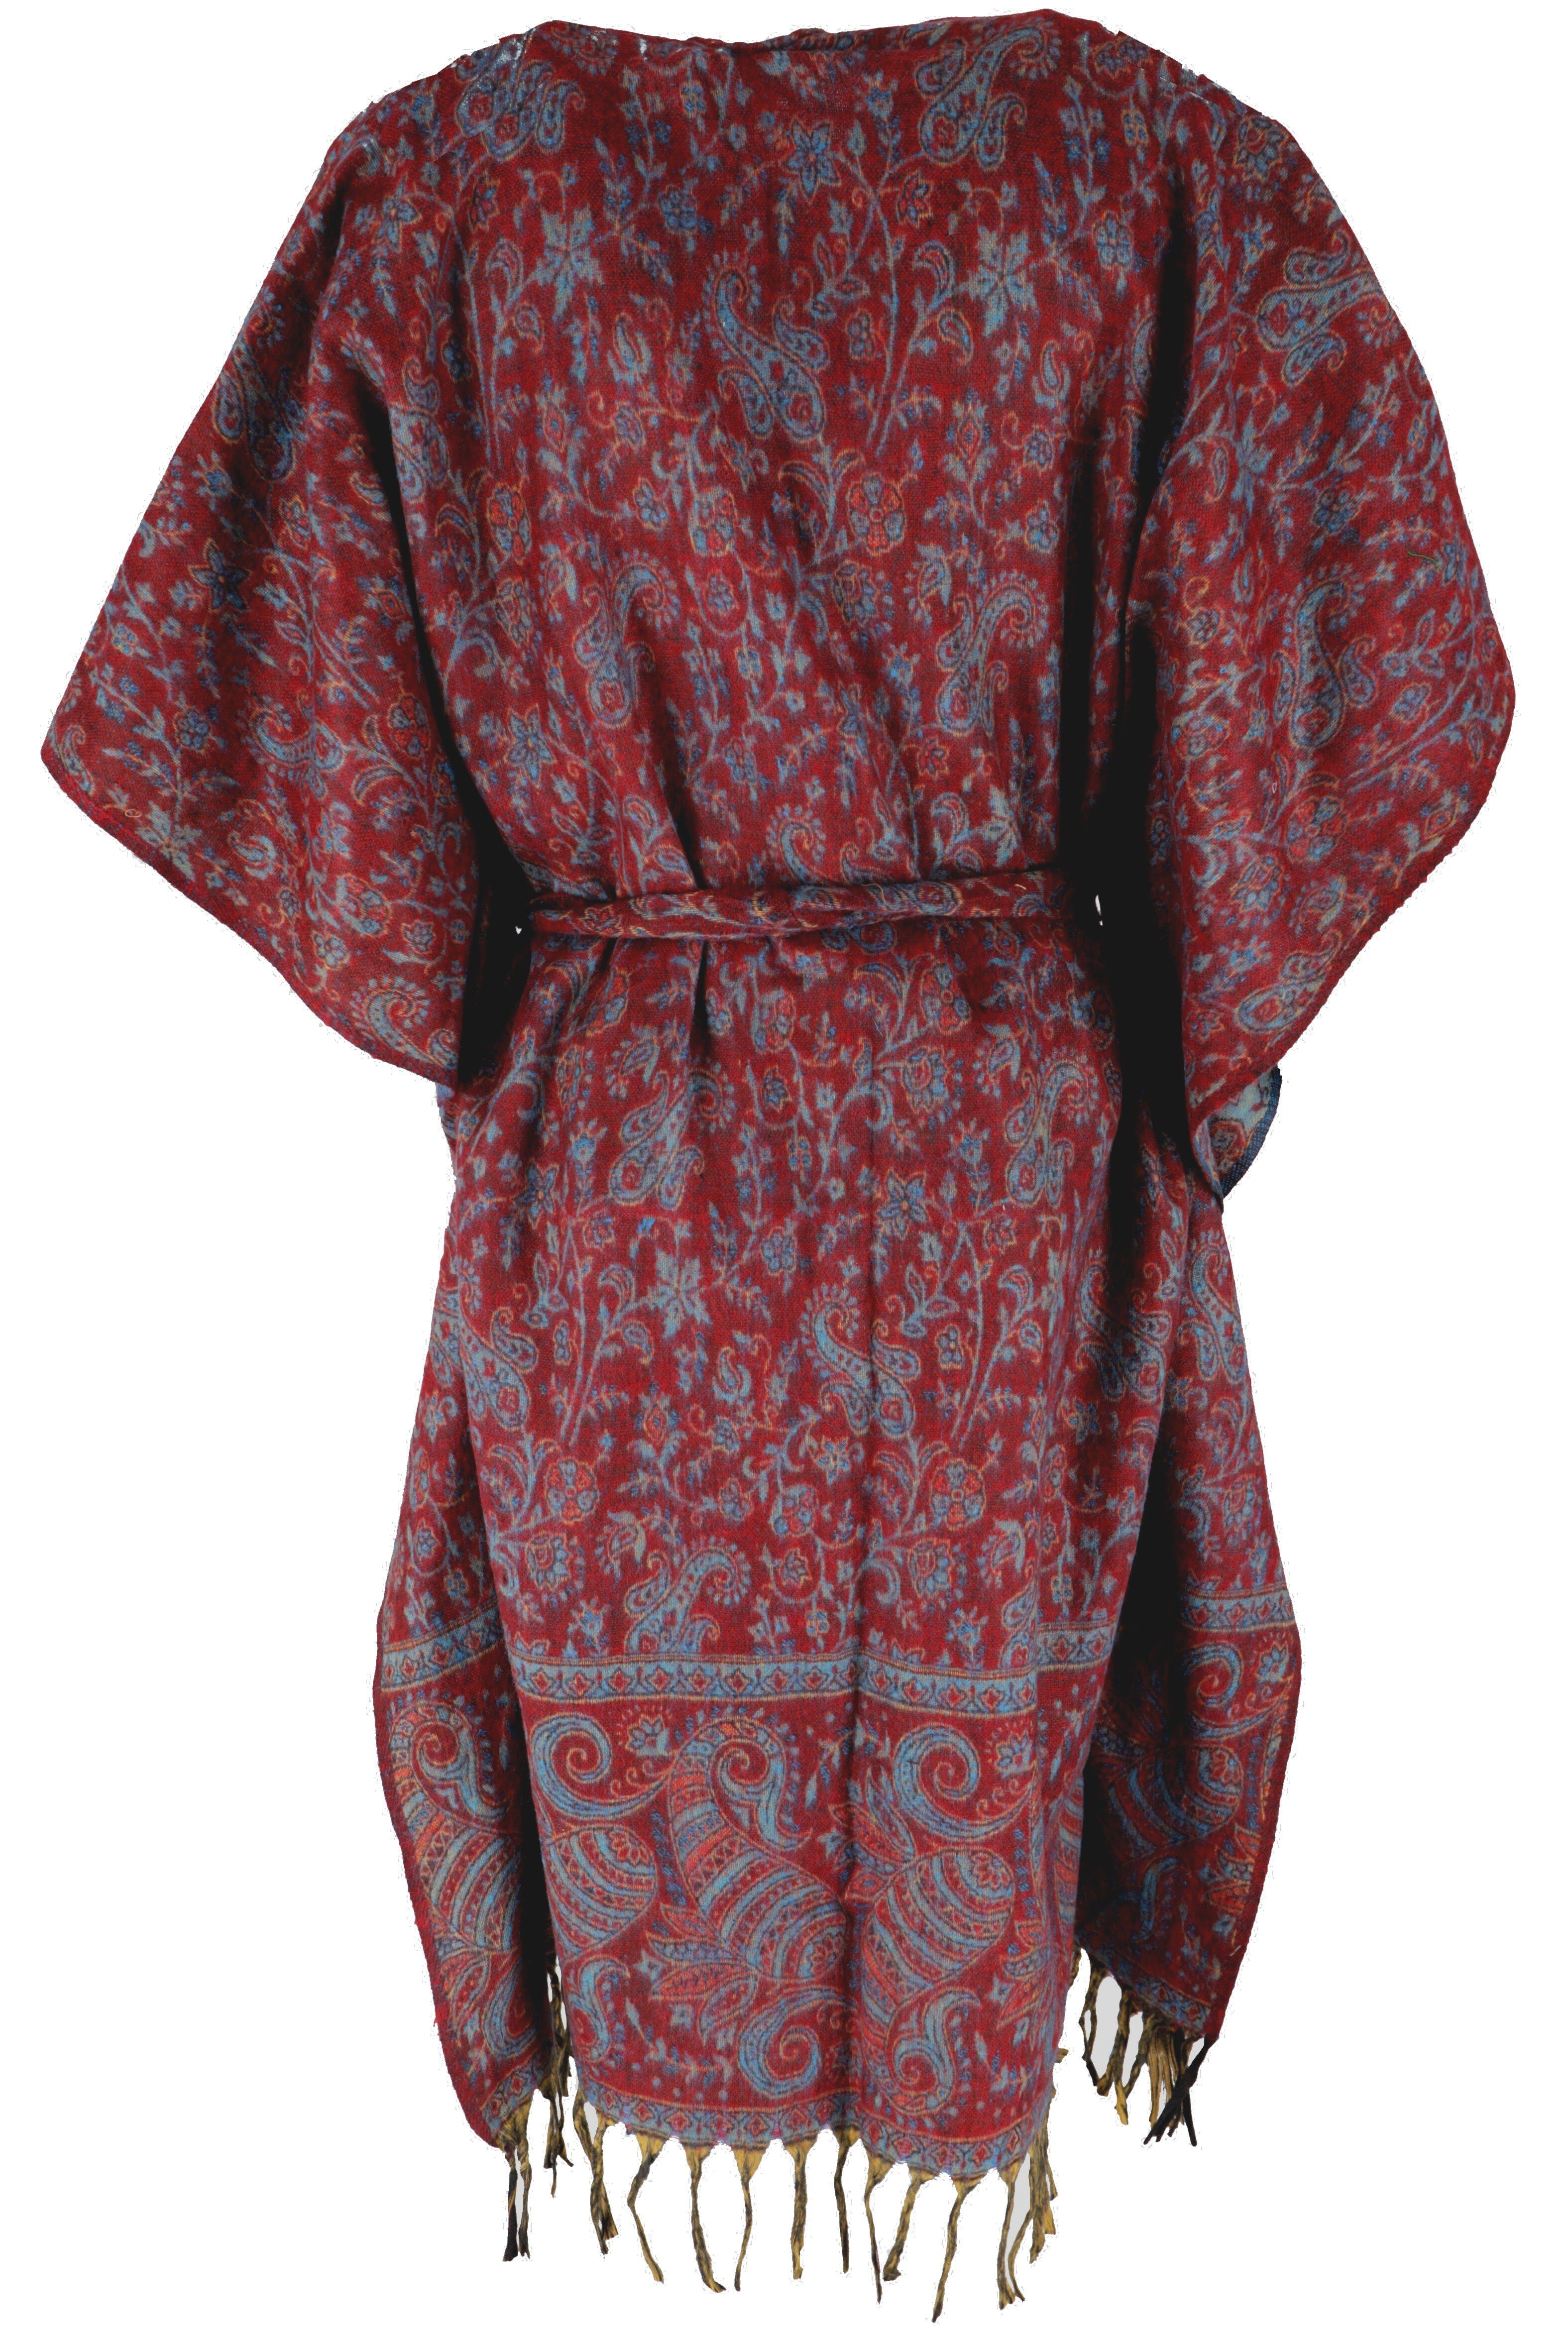 Guru-Shop Kimono Flauschiger Kimono Bekleidung Mantel, Kimonokleid, bordeauxrot/blau Kaftan,.., alternative